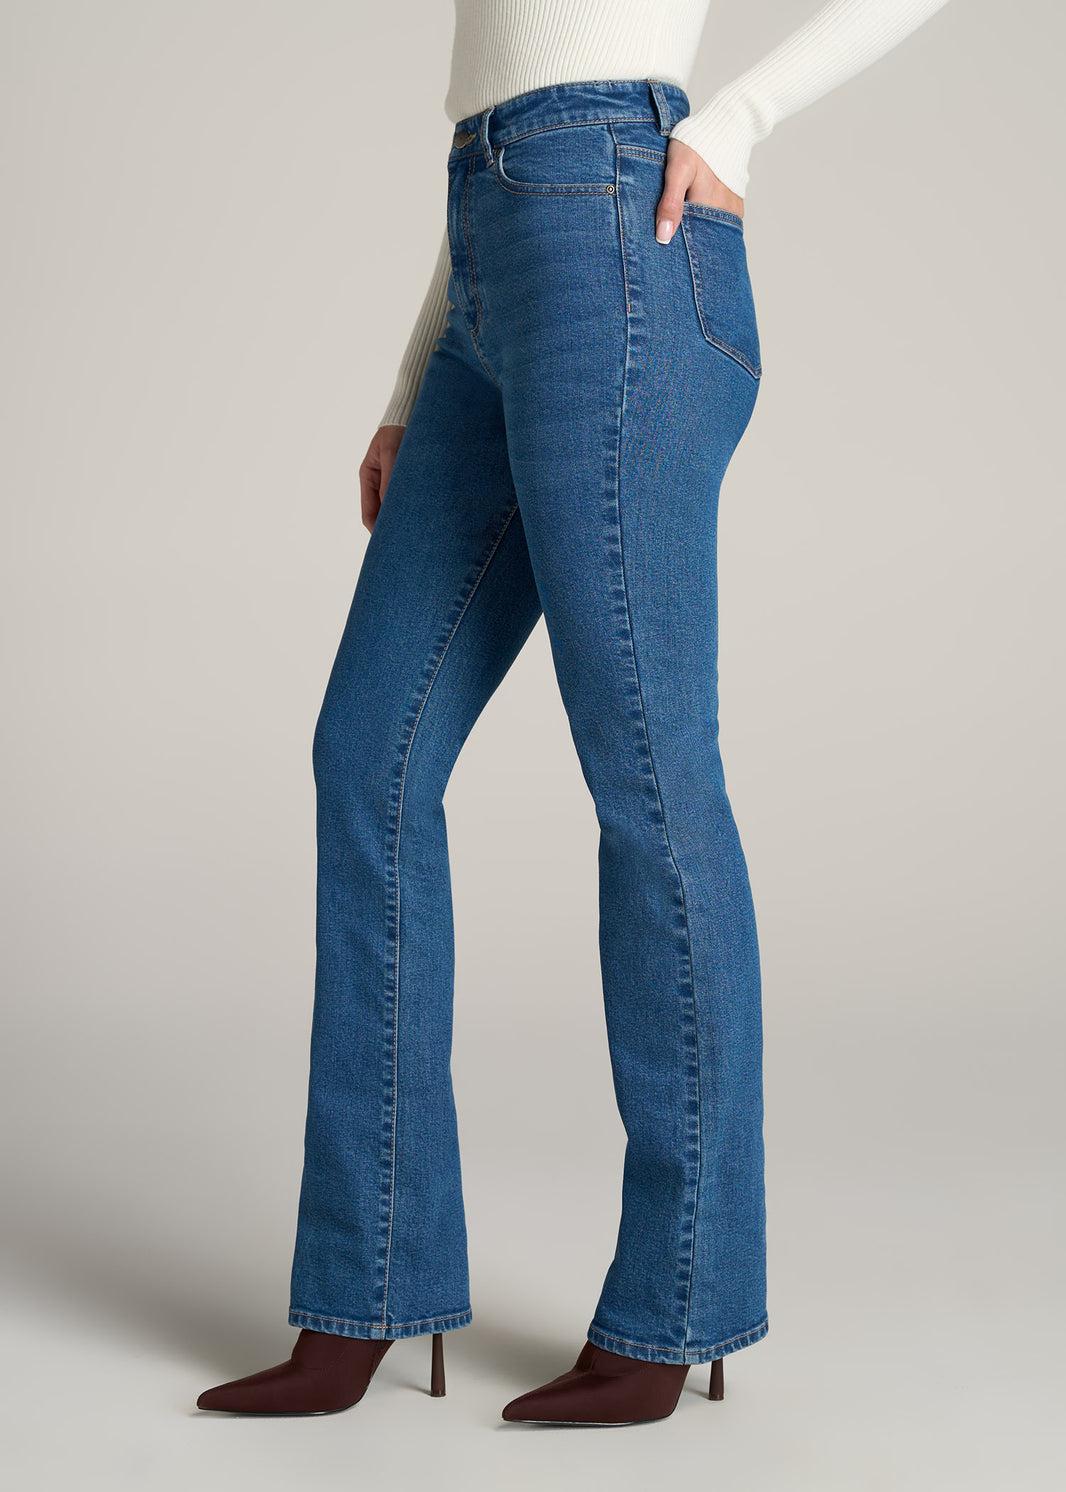 Women's Tall Bootcut Jeans | American Tall